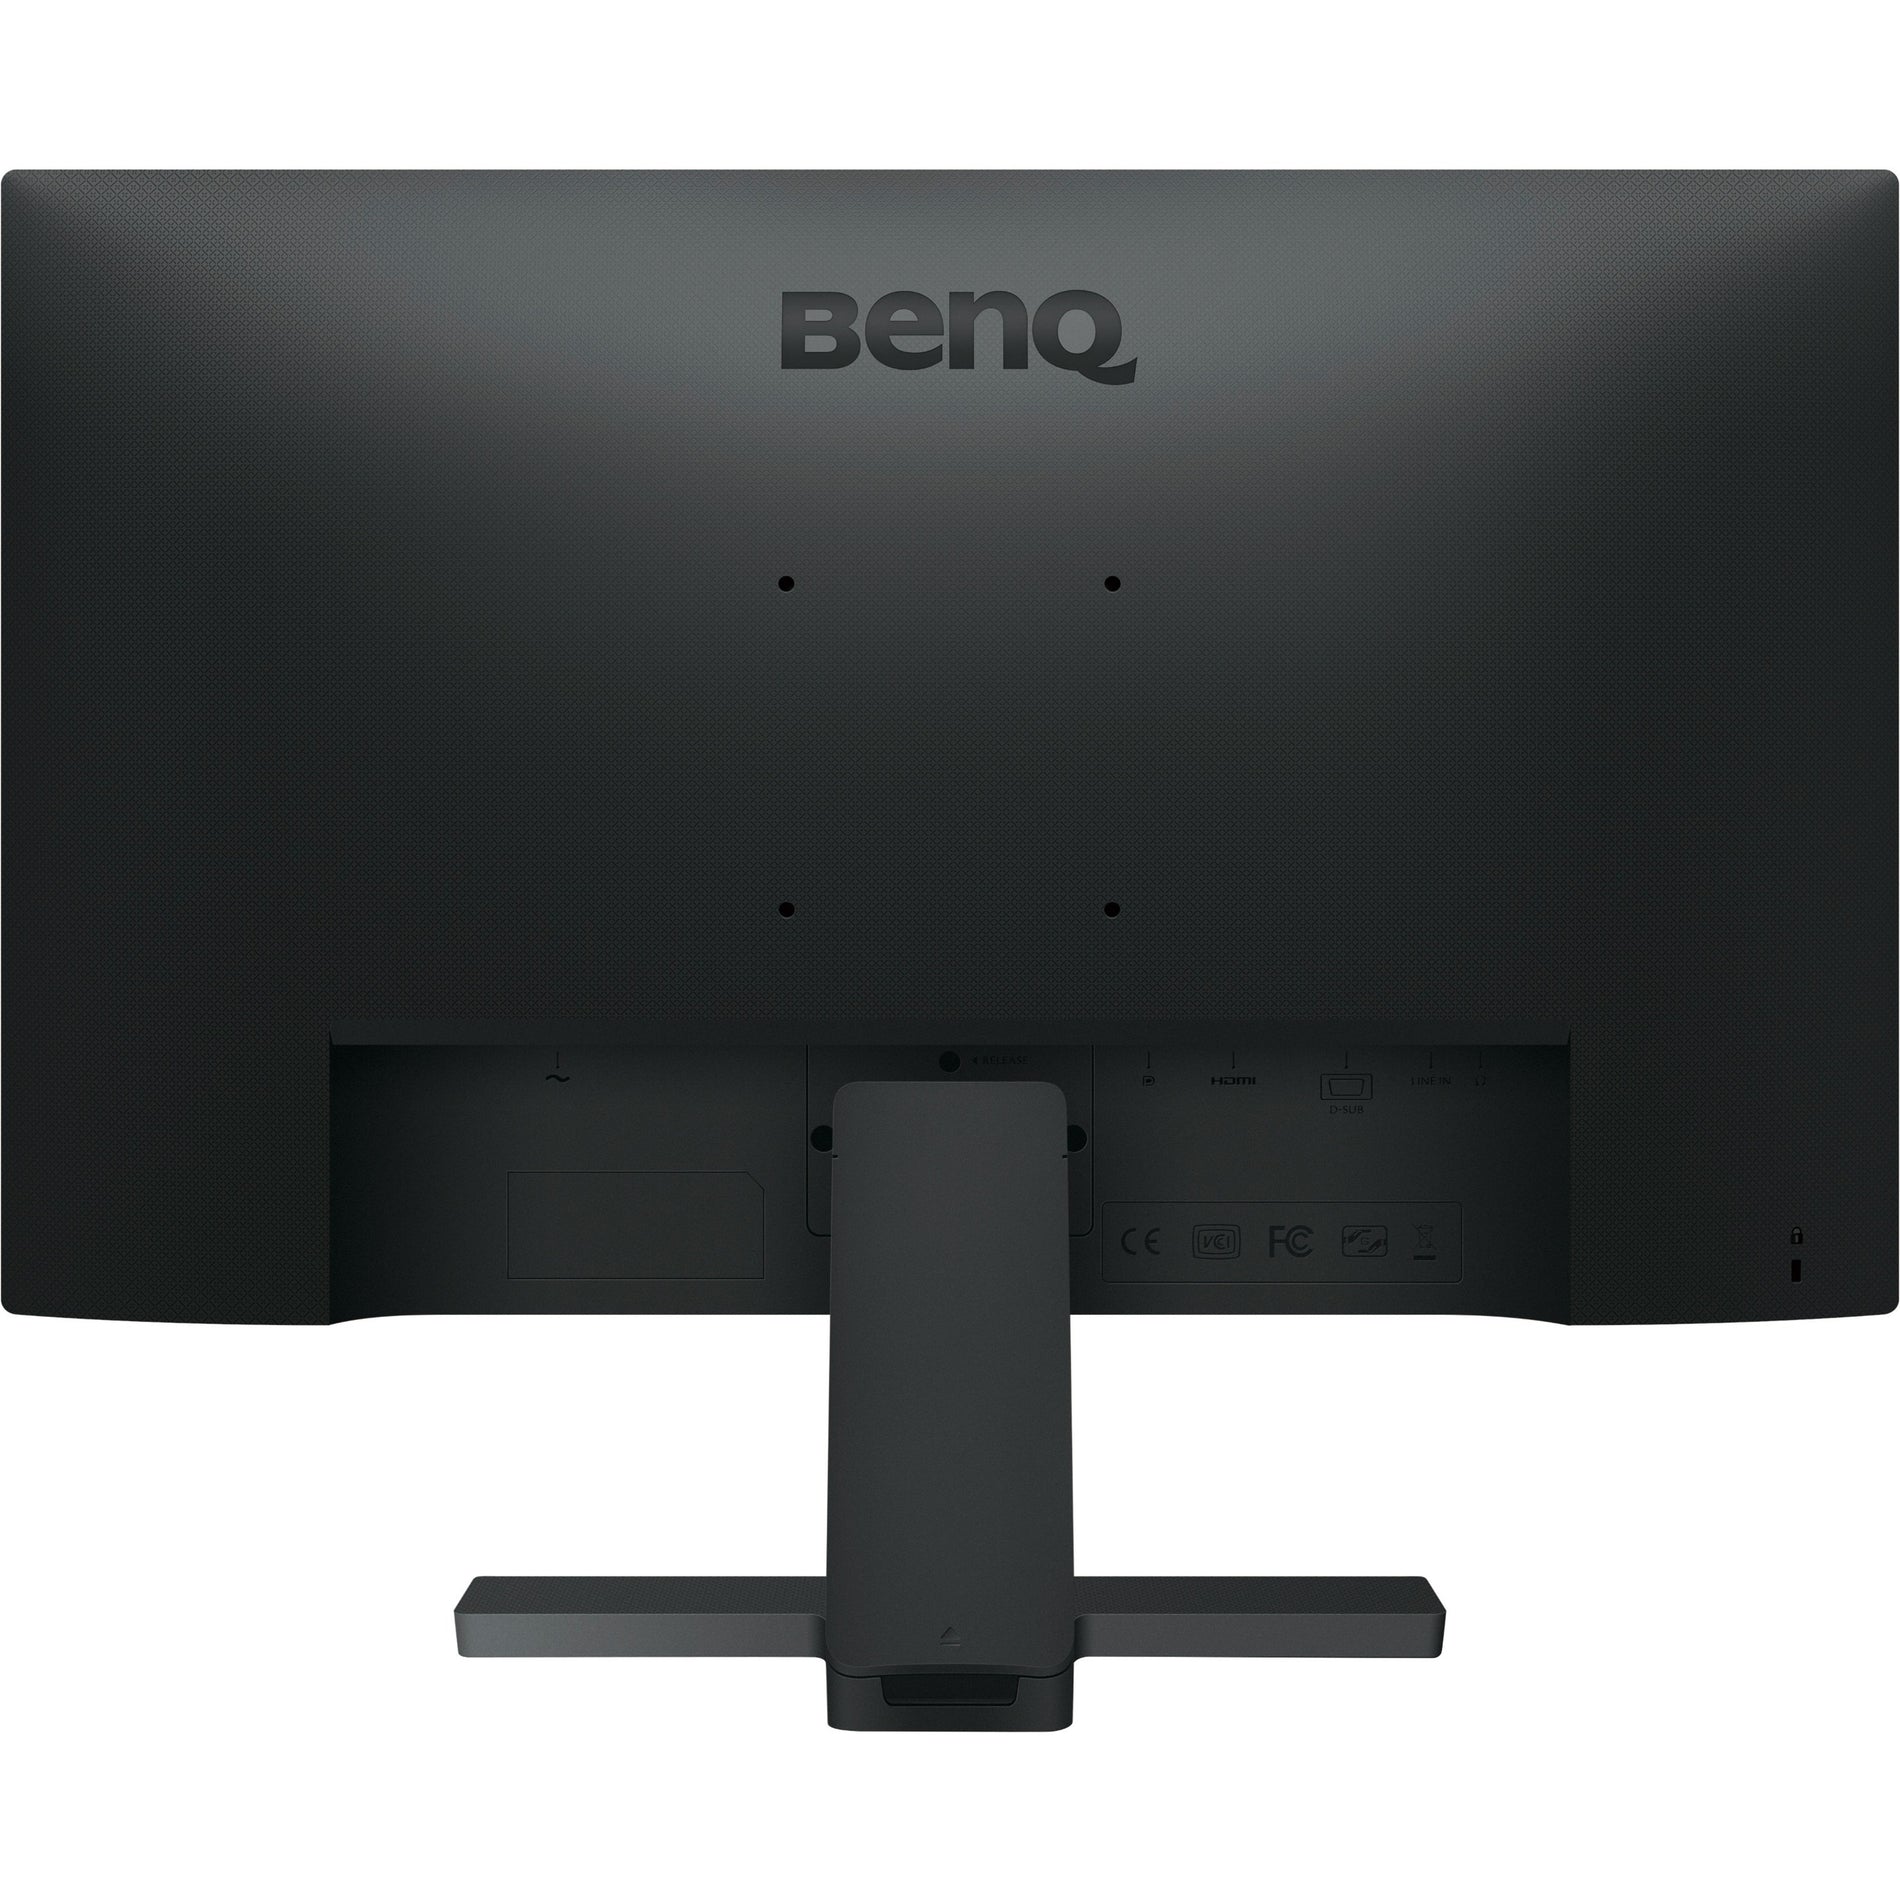 BenQ GW2480 Stylish Monitor with 23.8 inch 1080p Eye-care Technology, Full HD LCD Monitor - 16:9 - Black